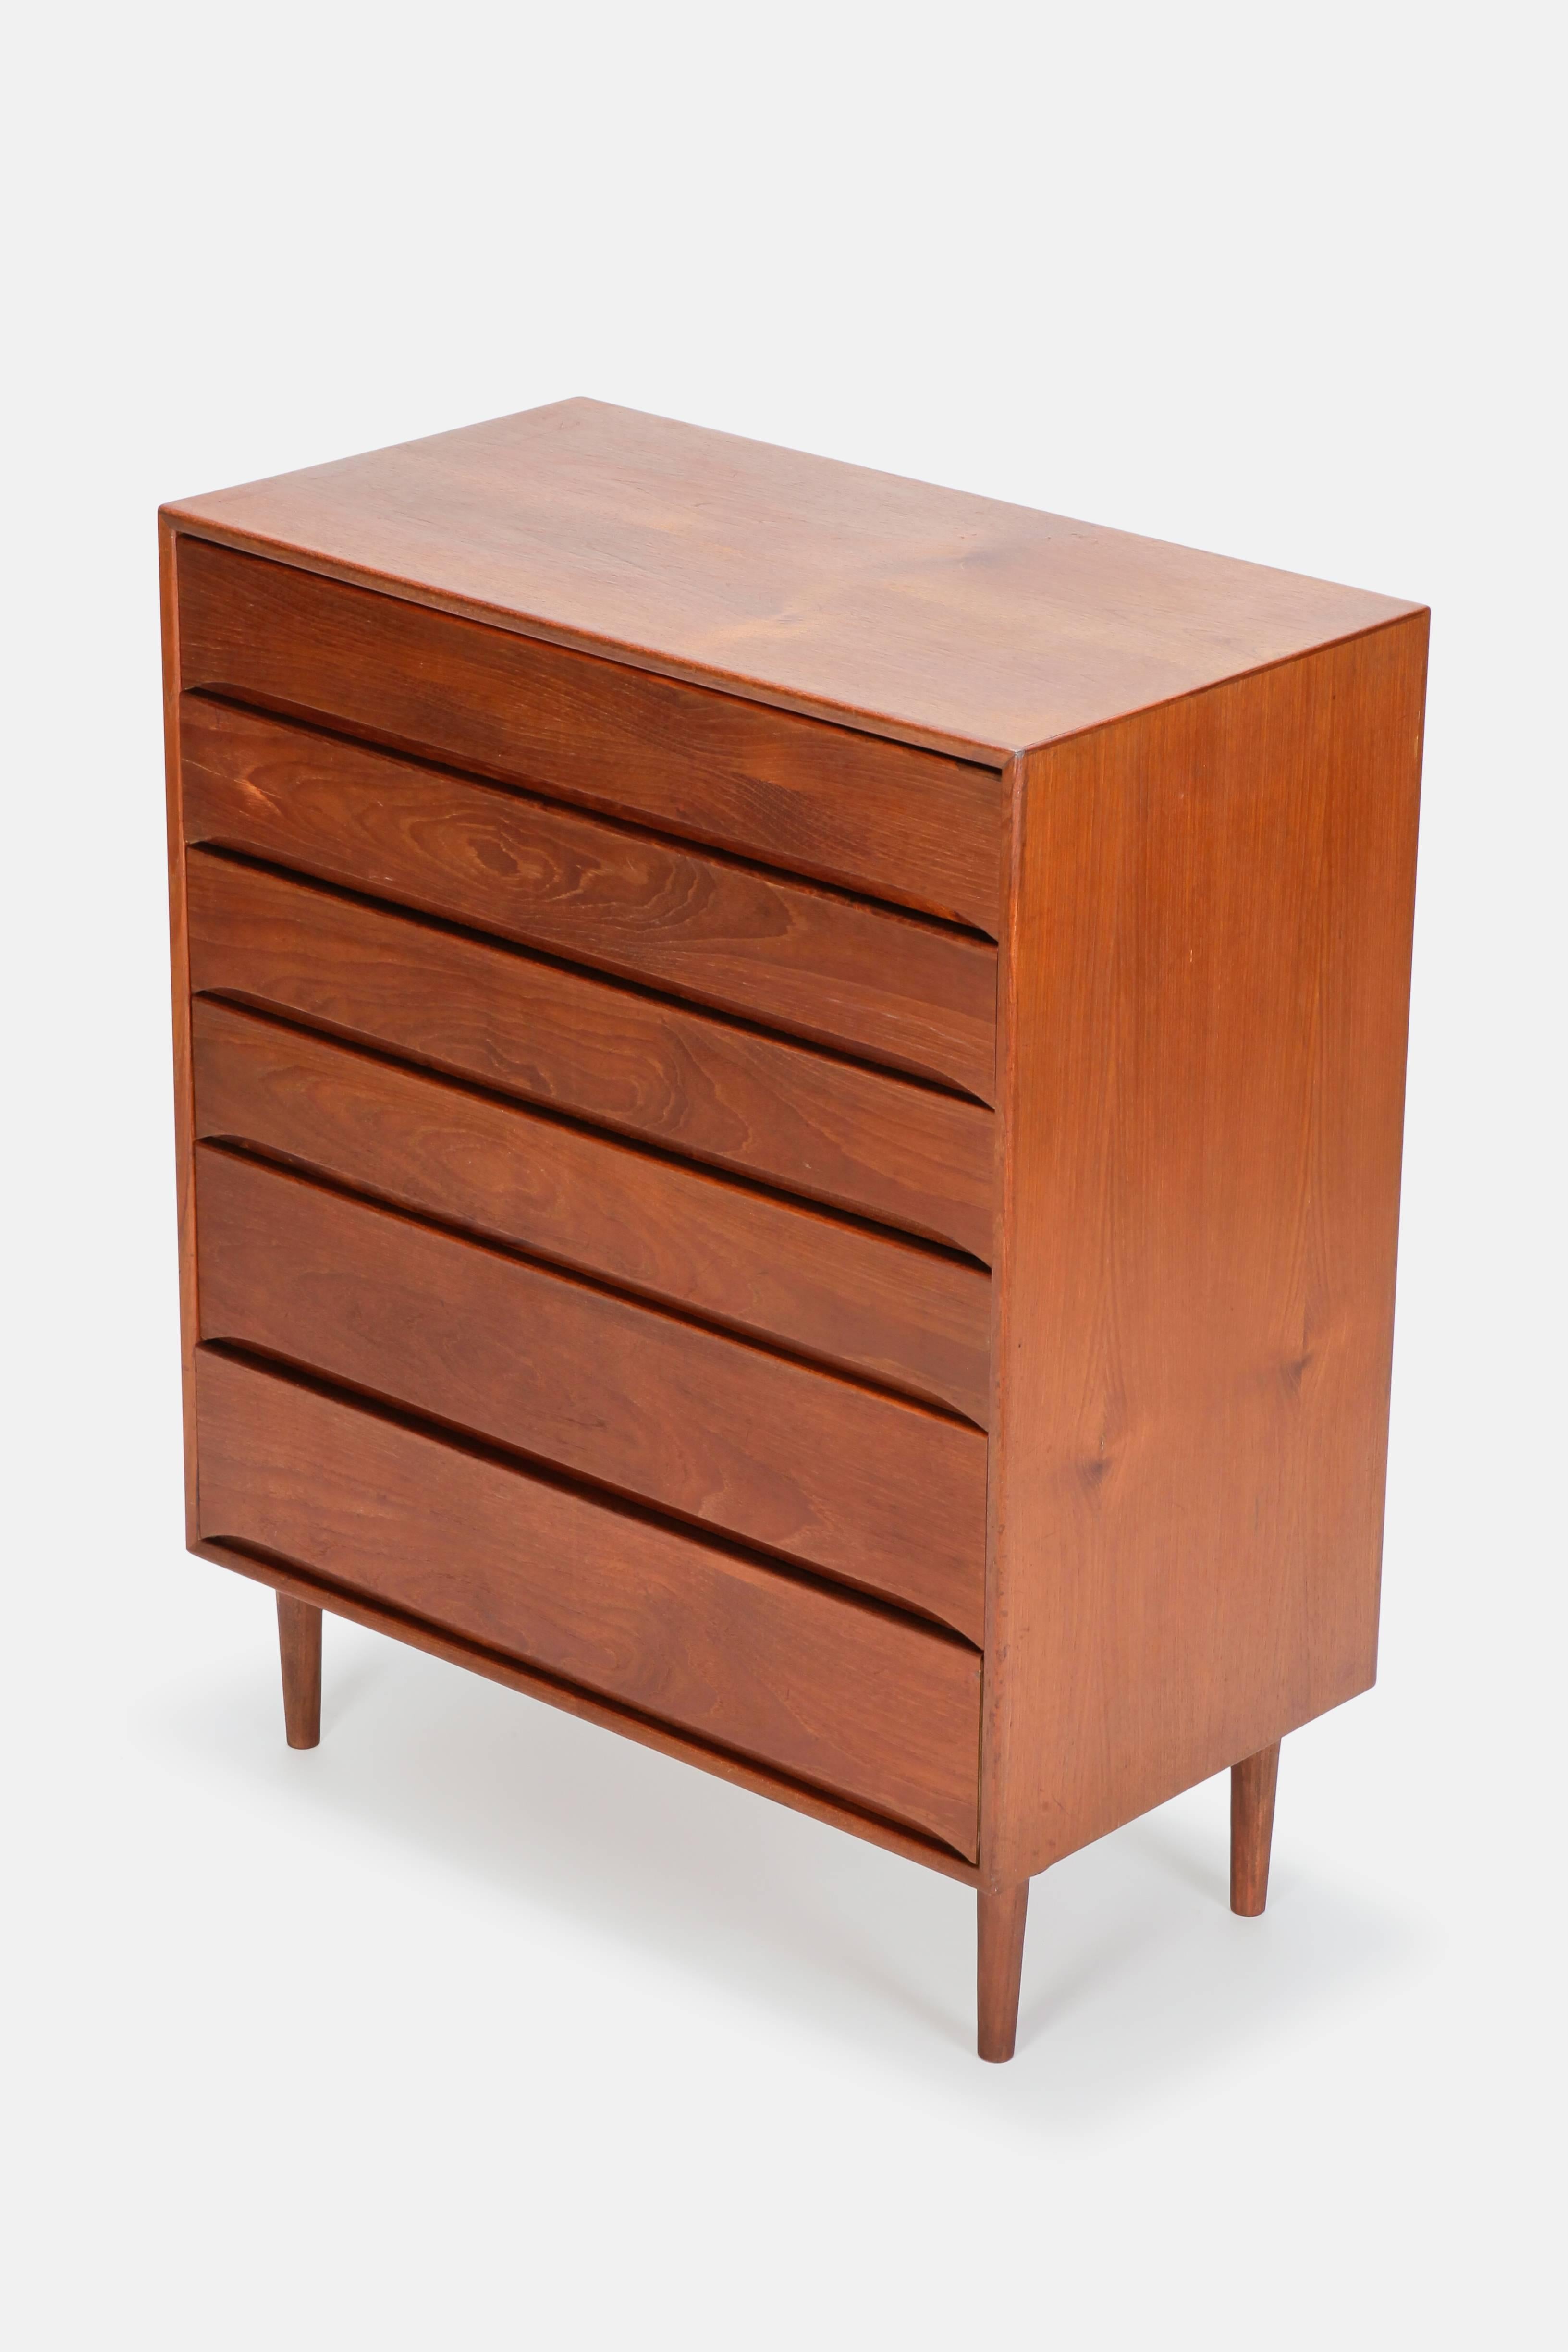 Norwegian teak dresser manufactured in the 1960s. Elegant and refined design made of beautiful teak wood.